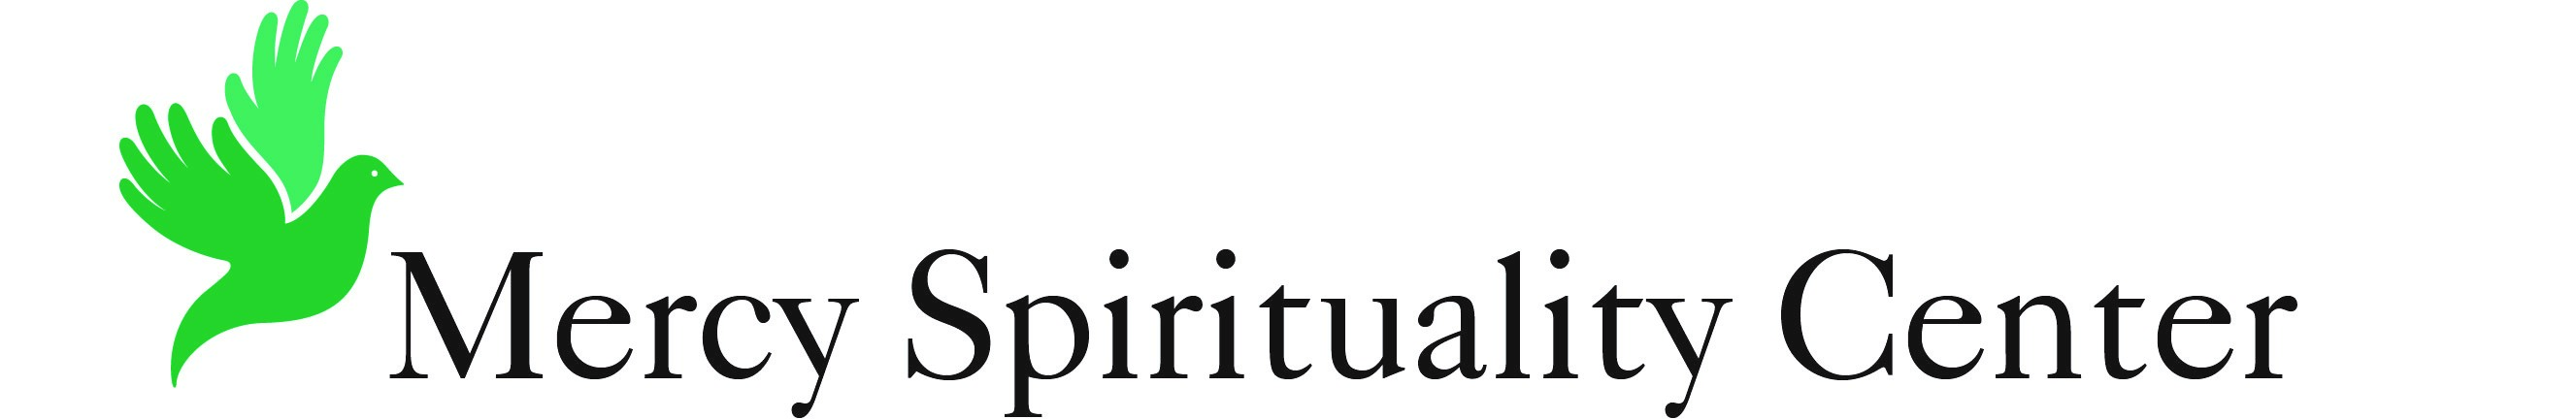 Mercy Spirituality Center